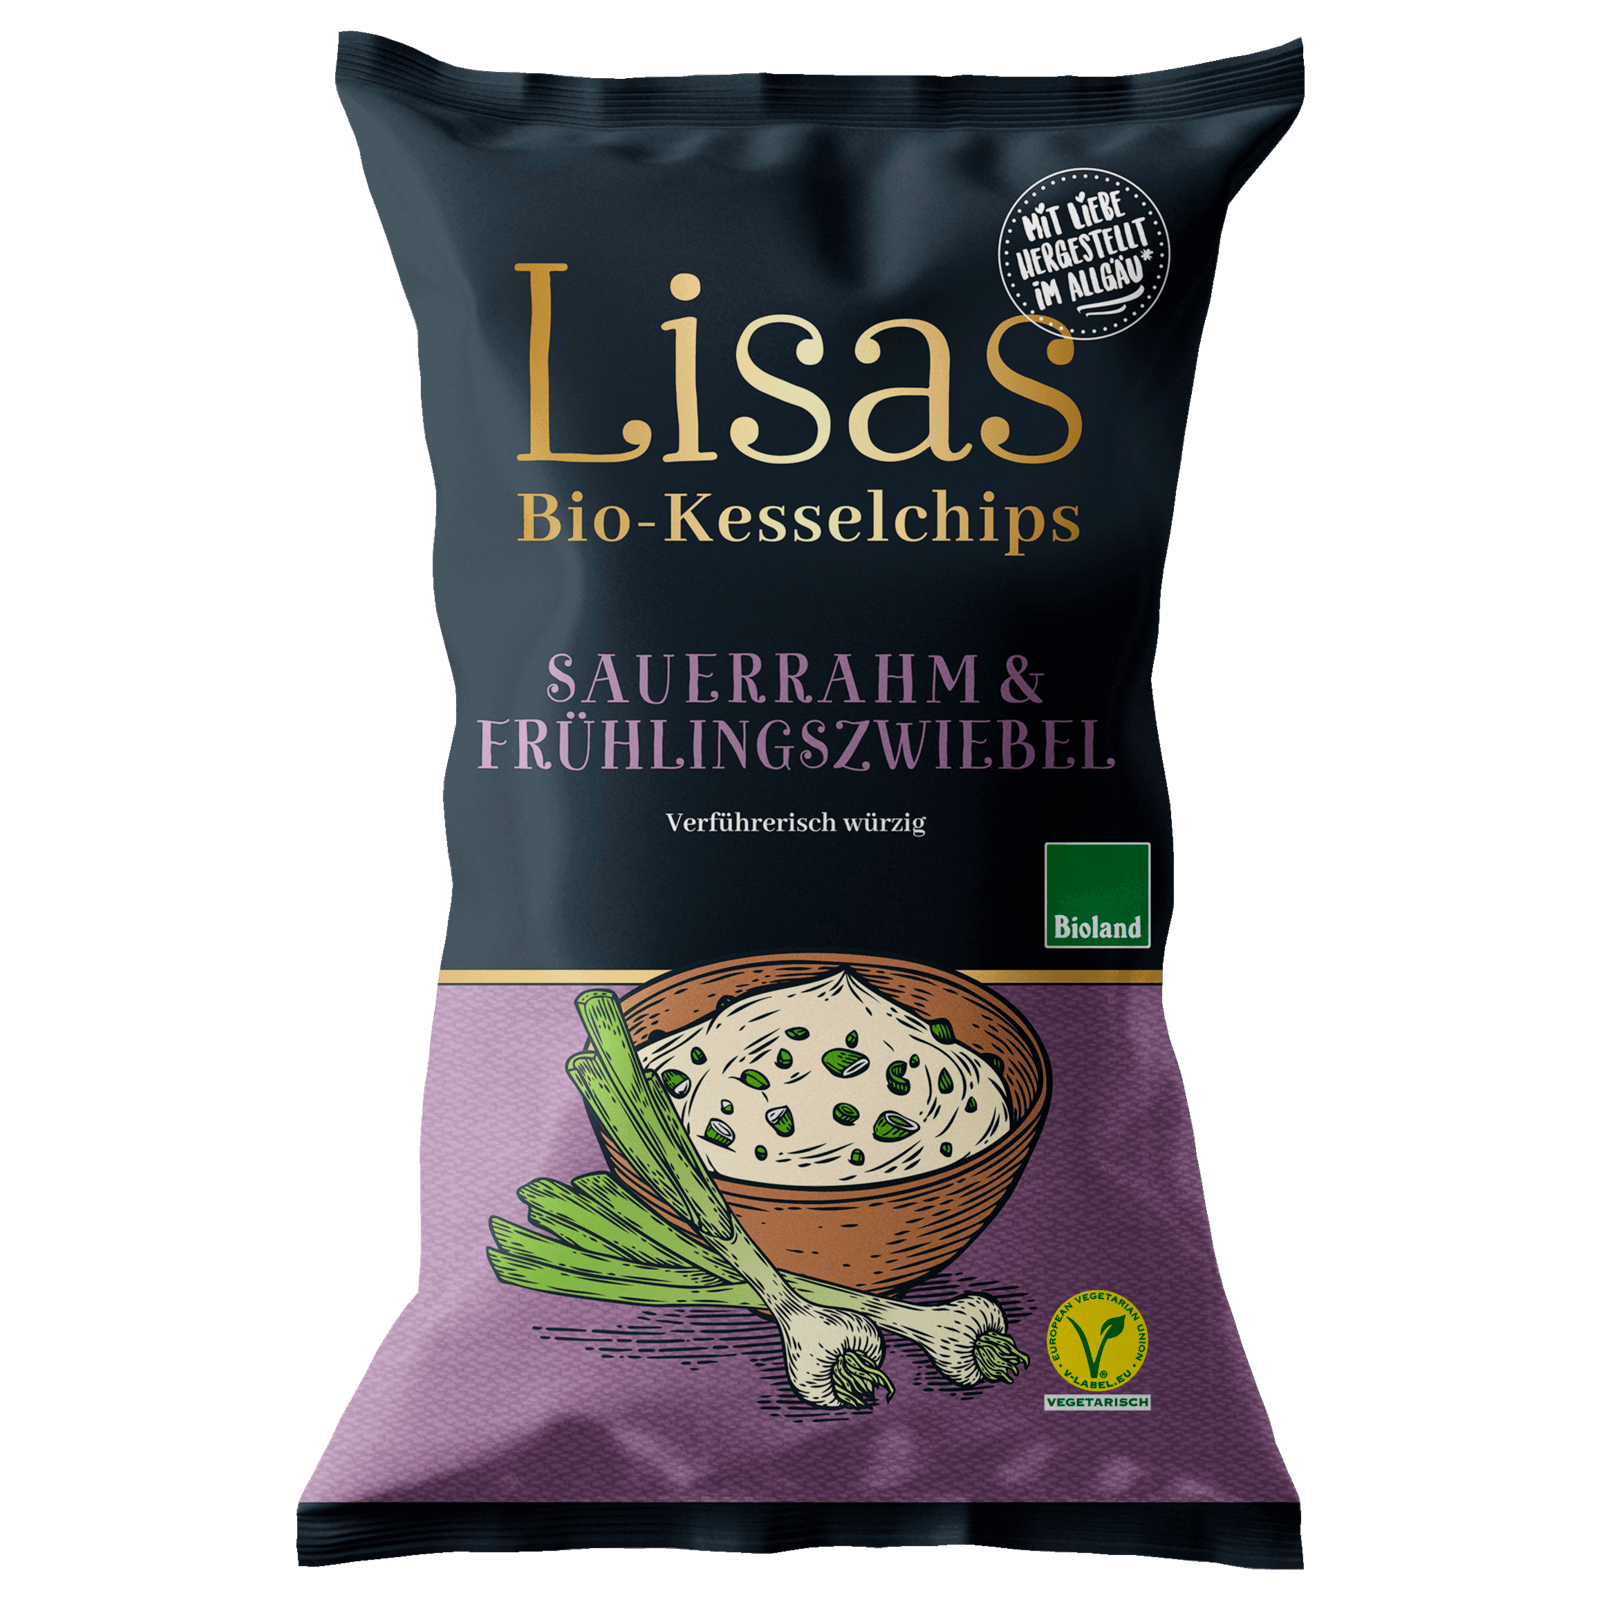 Lisa's Bio-Kesselchips Sauerrahm & Frühlingszwiebel vegetarisch 125g bei  REWE online bestellen!